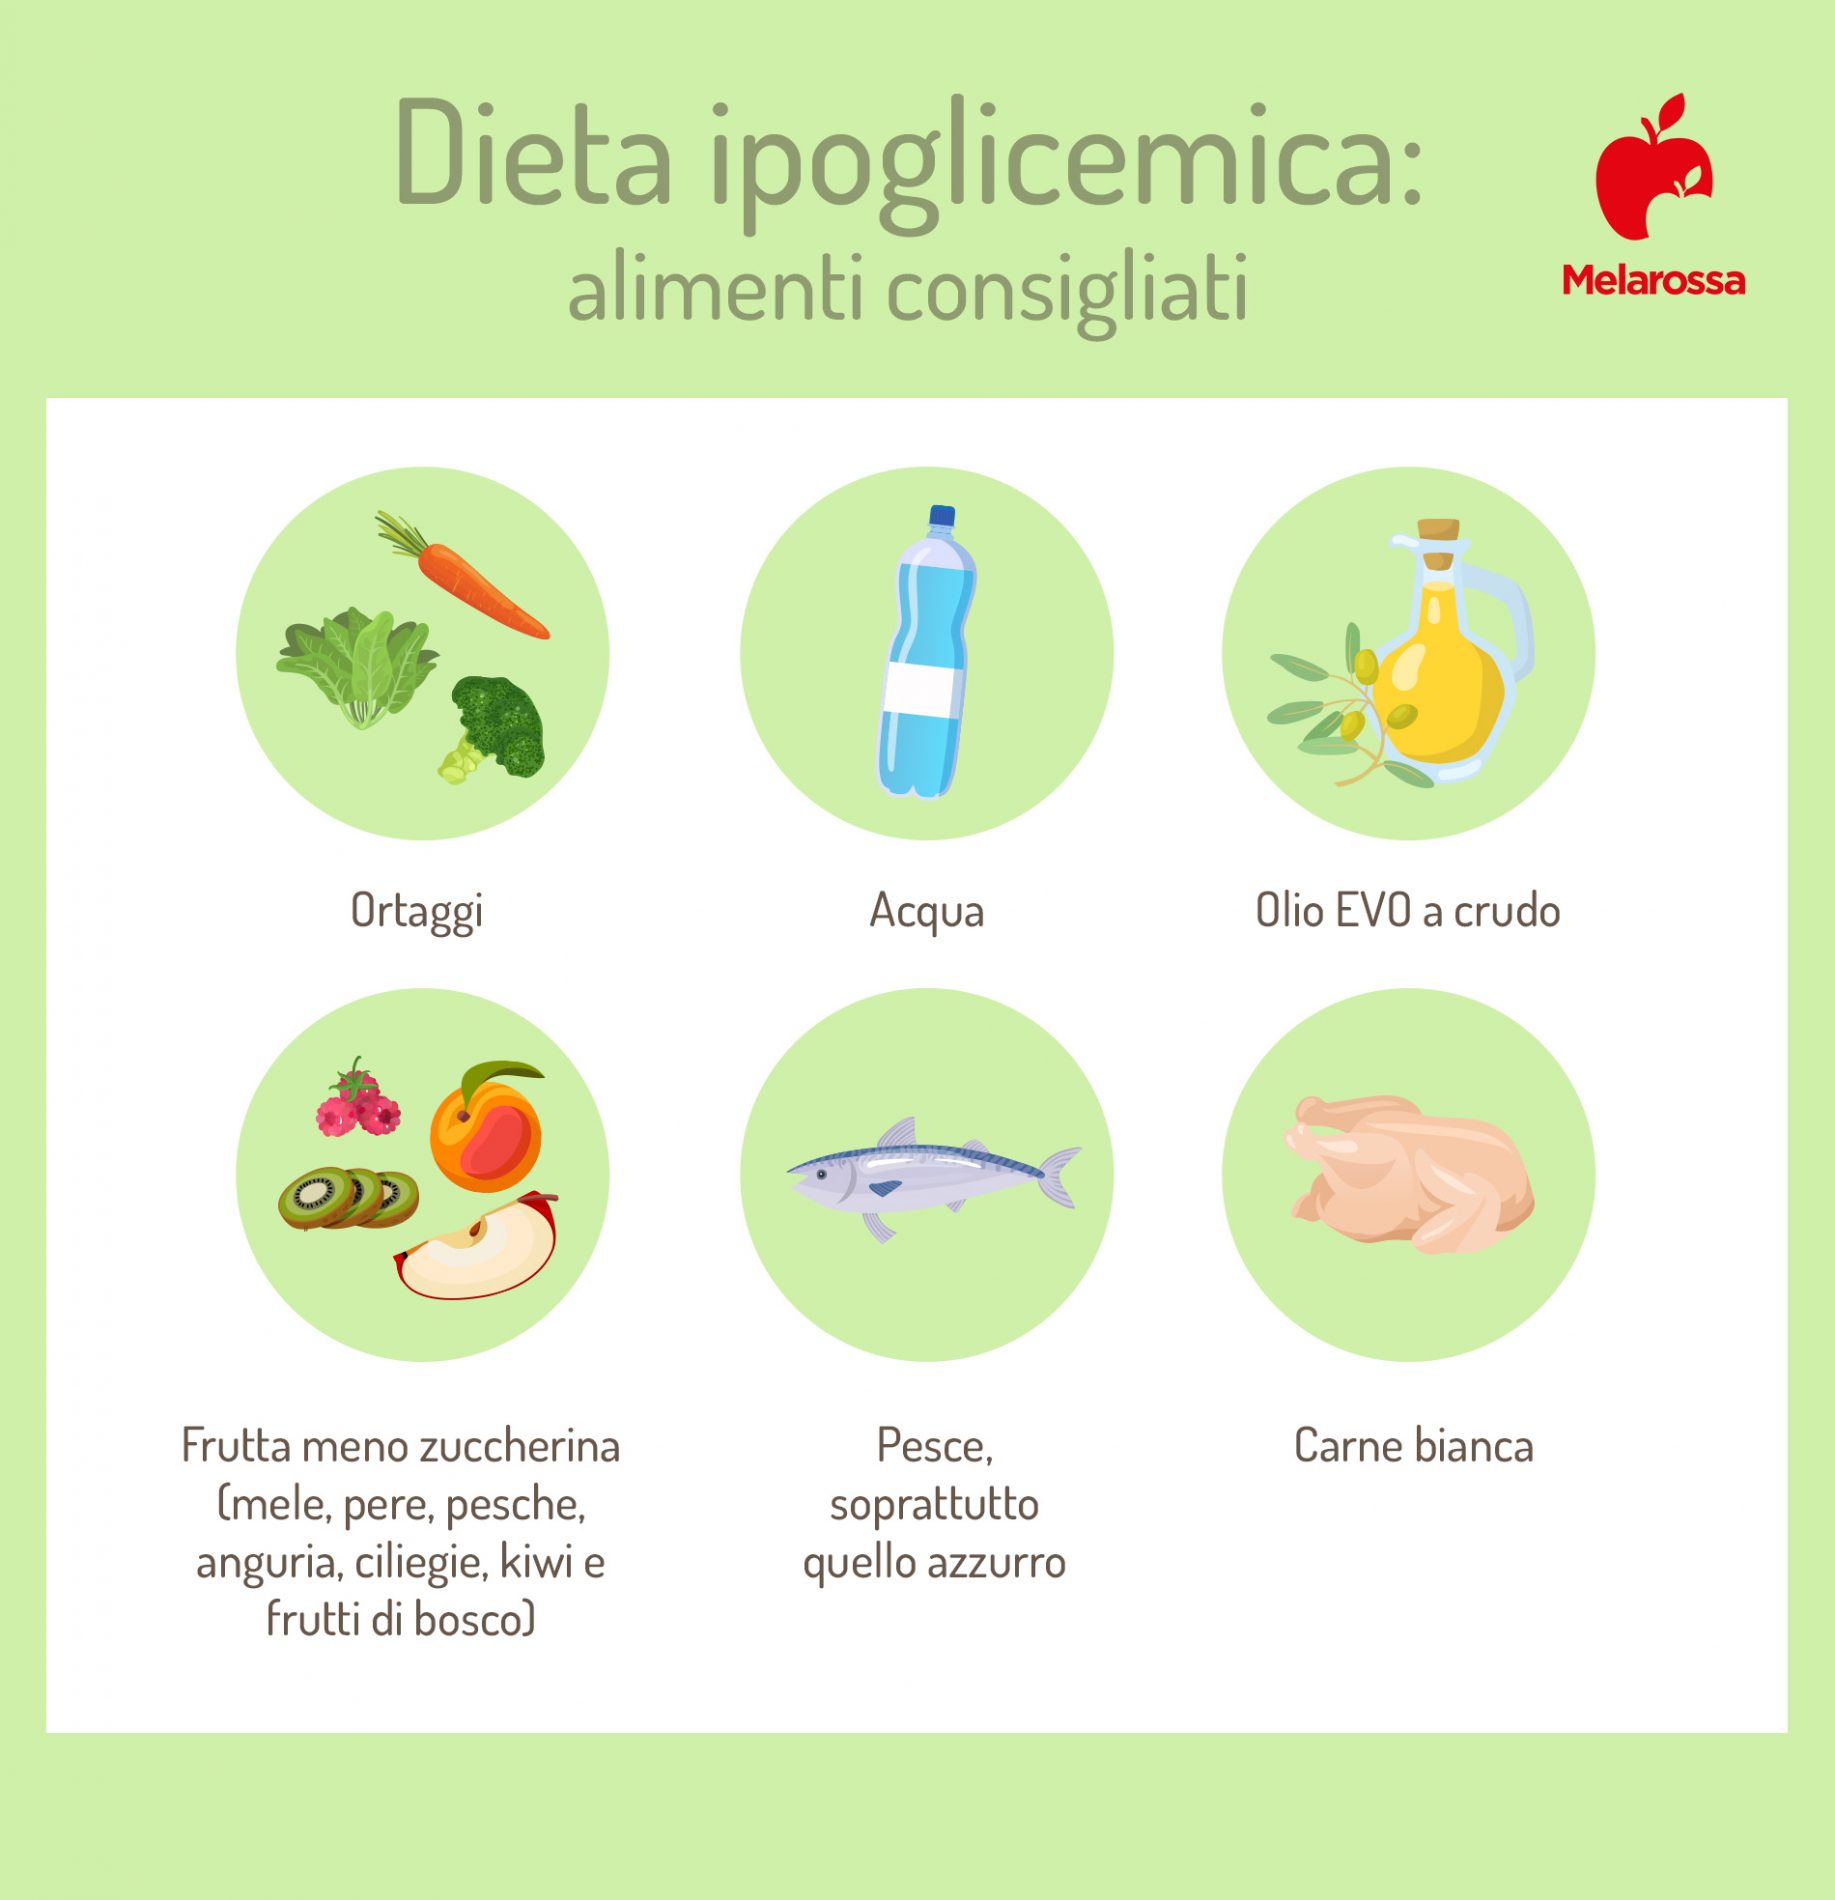 dieta ipoglicemica: alimenti consigliati 